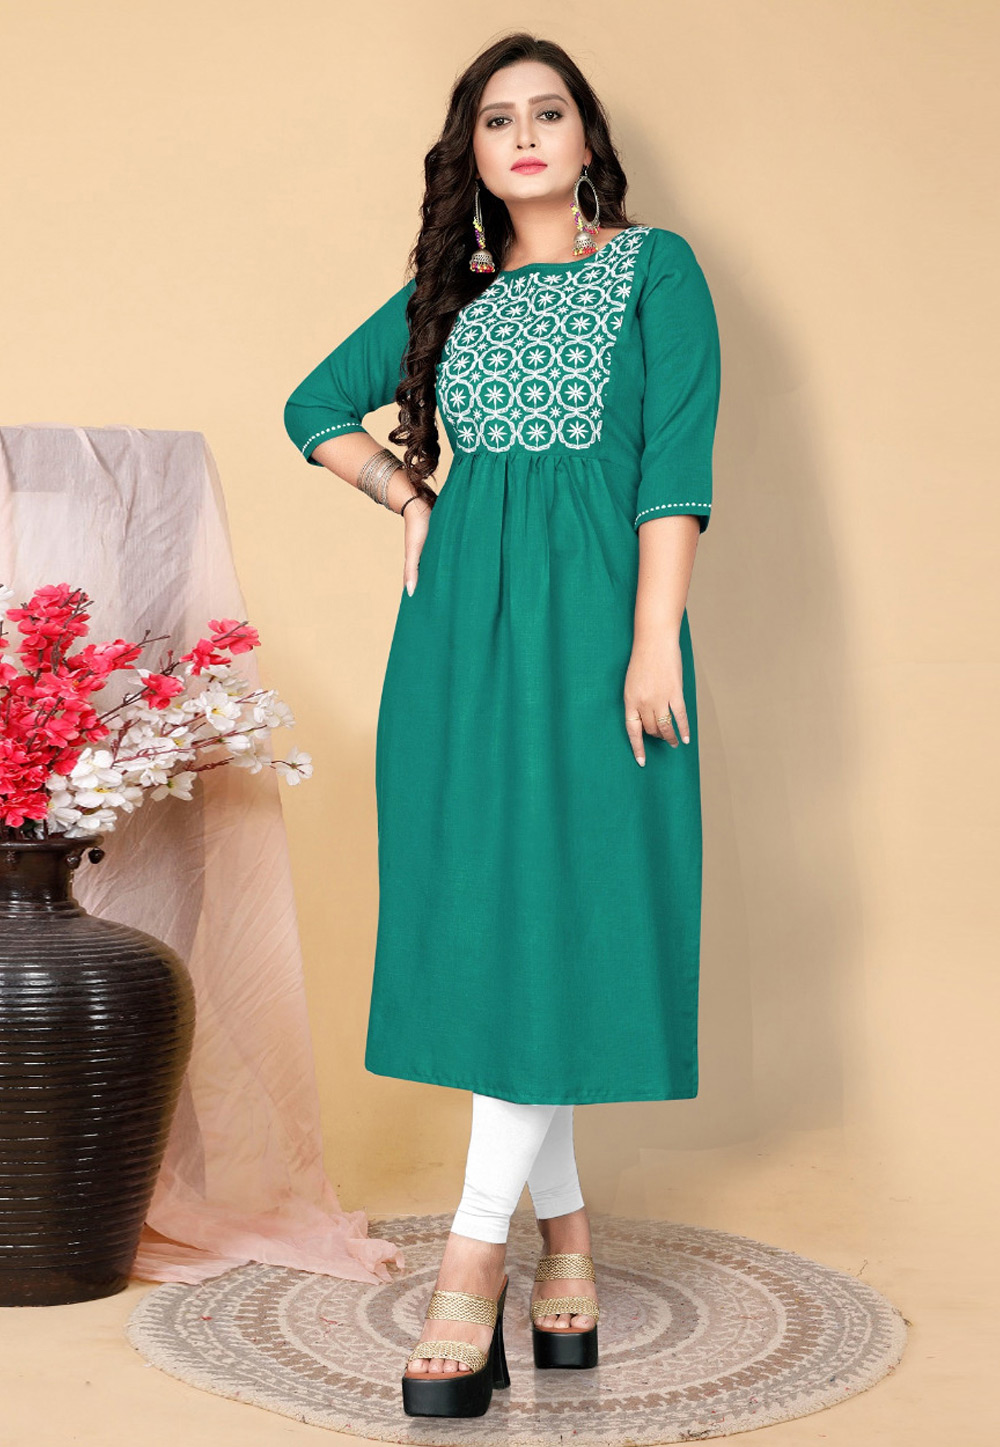 Buy 38/S-2 Size Green Plain Indian Kurti Tunic Online for Women in USA